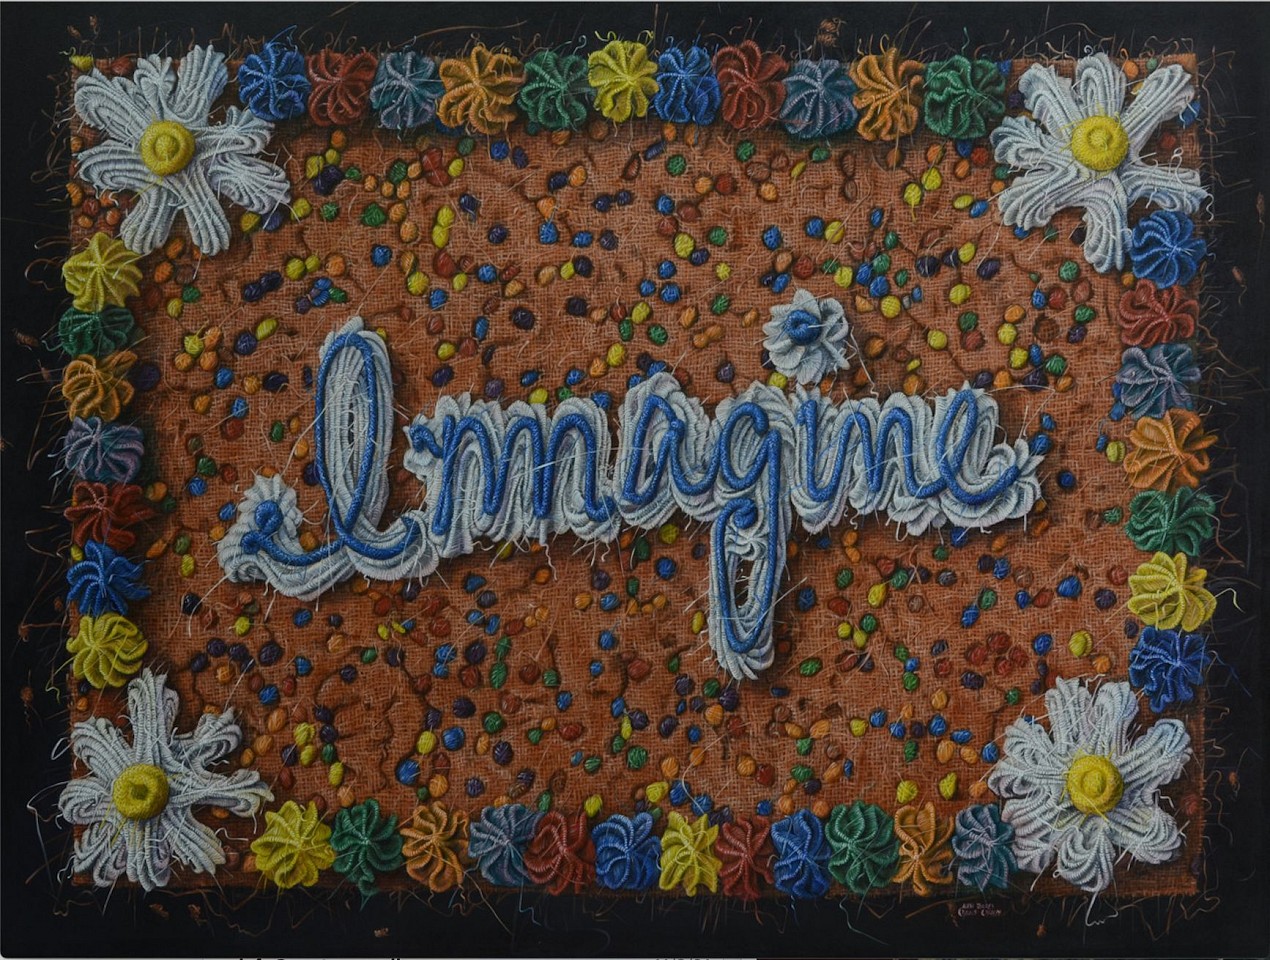 Alexi Torres, Celebration - Imagine, 2014
Original Oil on Canvas, 72 x 96 in.